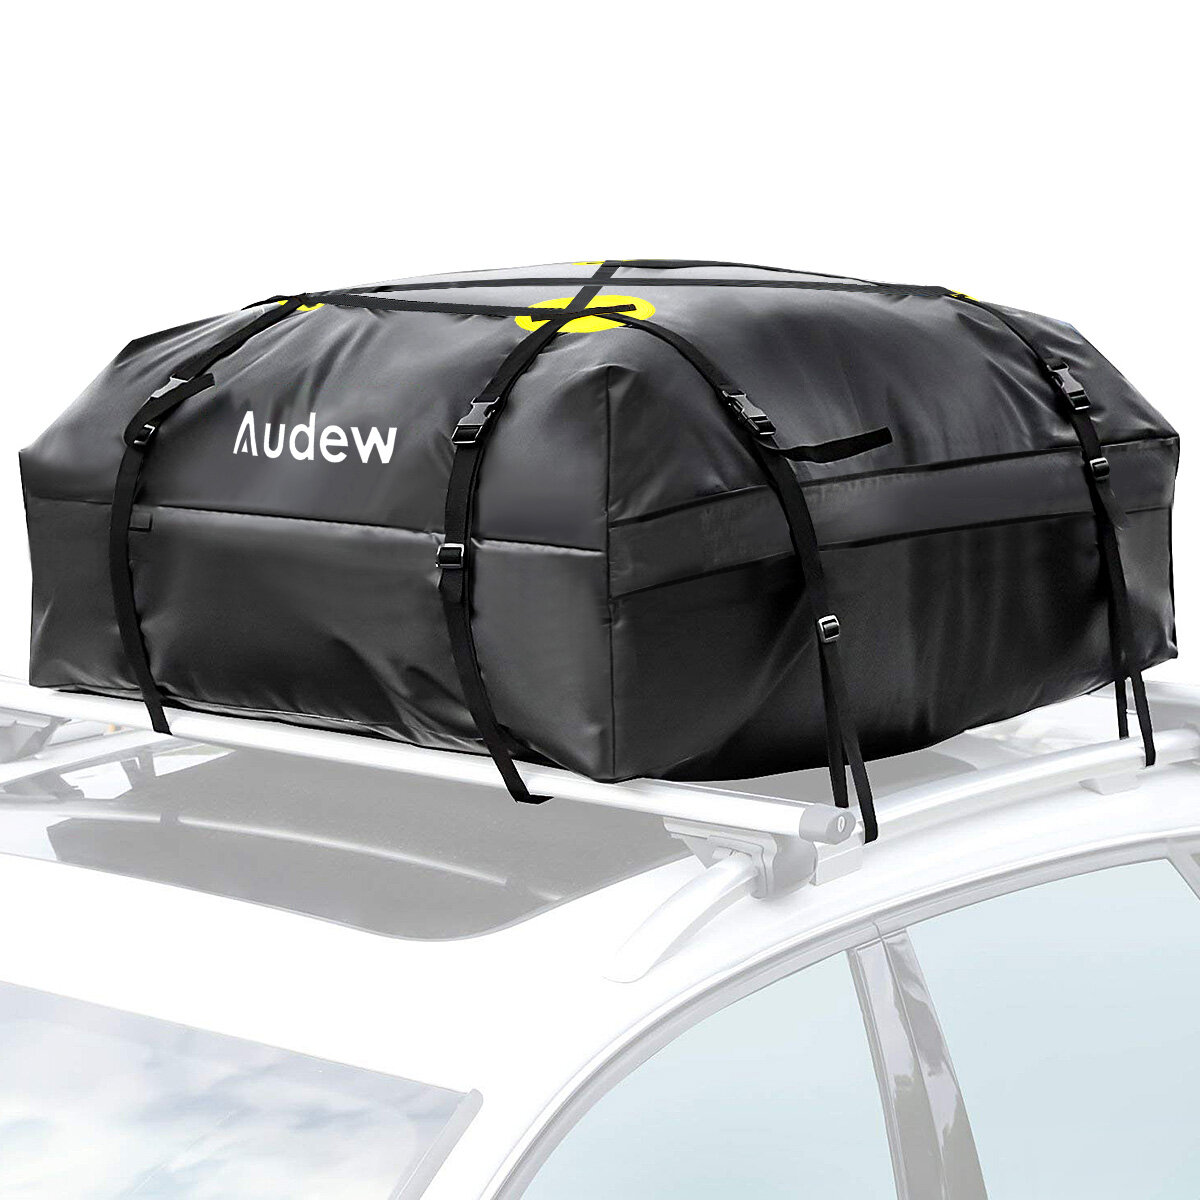 

Audew 15 Cubic Cargo Carrier Bag Protection Rooftop Organizer Roof Storage Waterproof Package 600D for Cars Trucks Van S